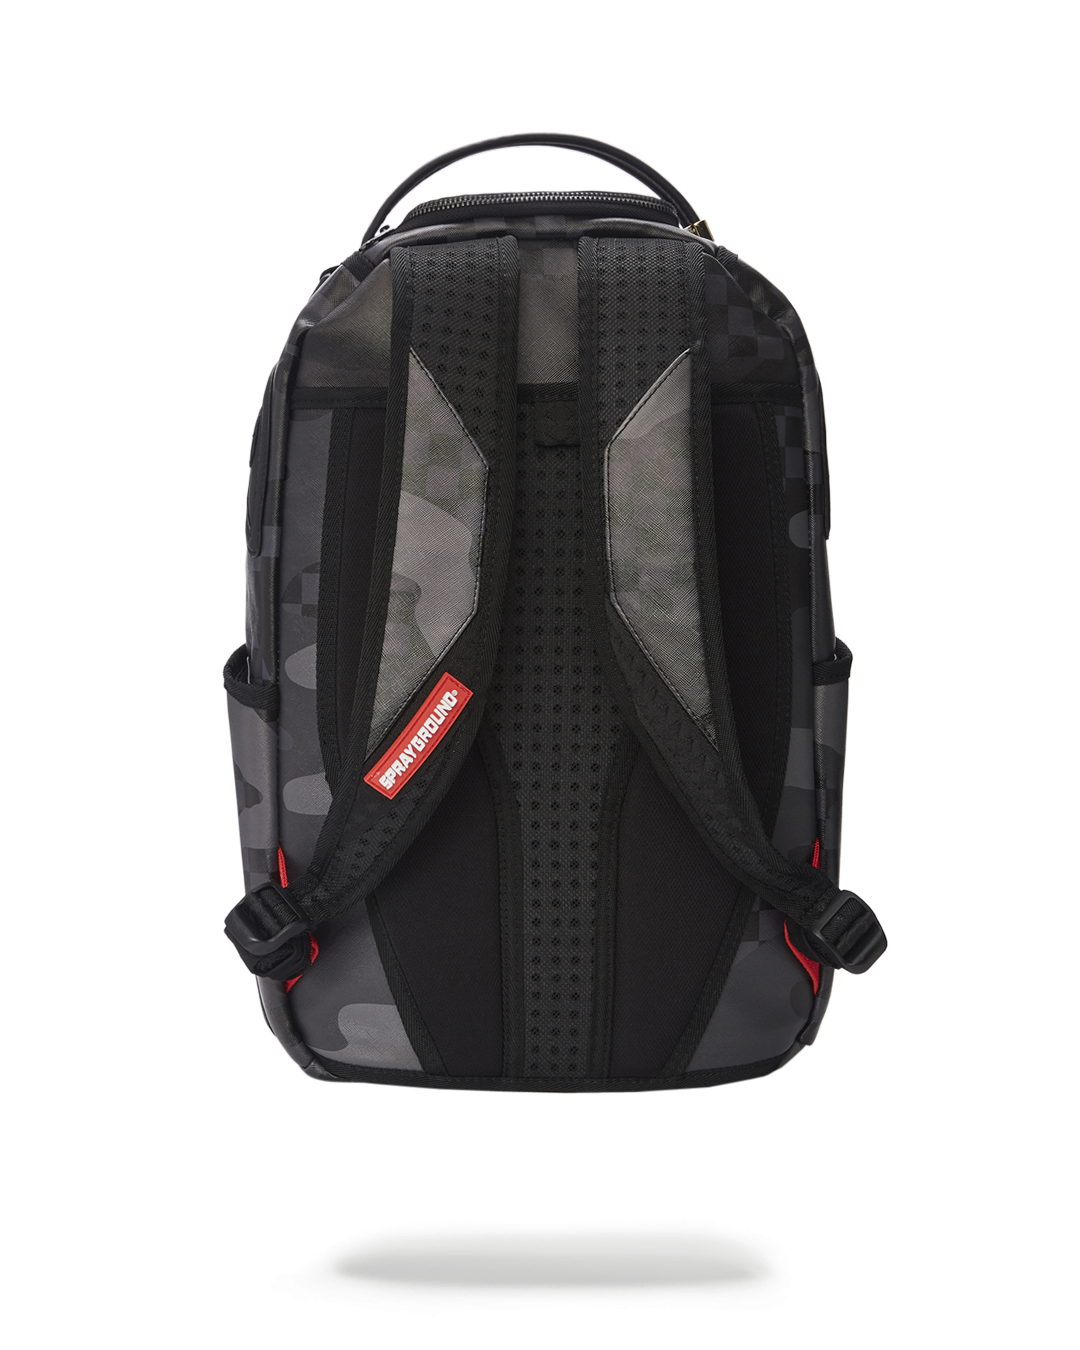 Sprayground 3am Limited Edition Shark Backpack in Black for Men